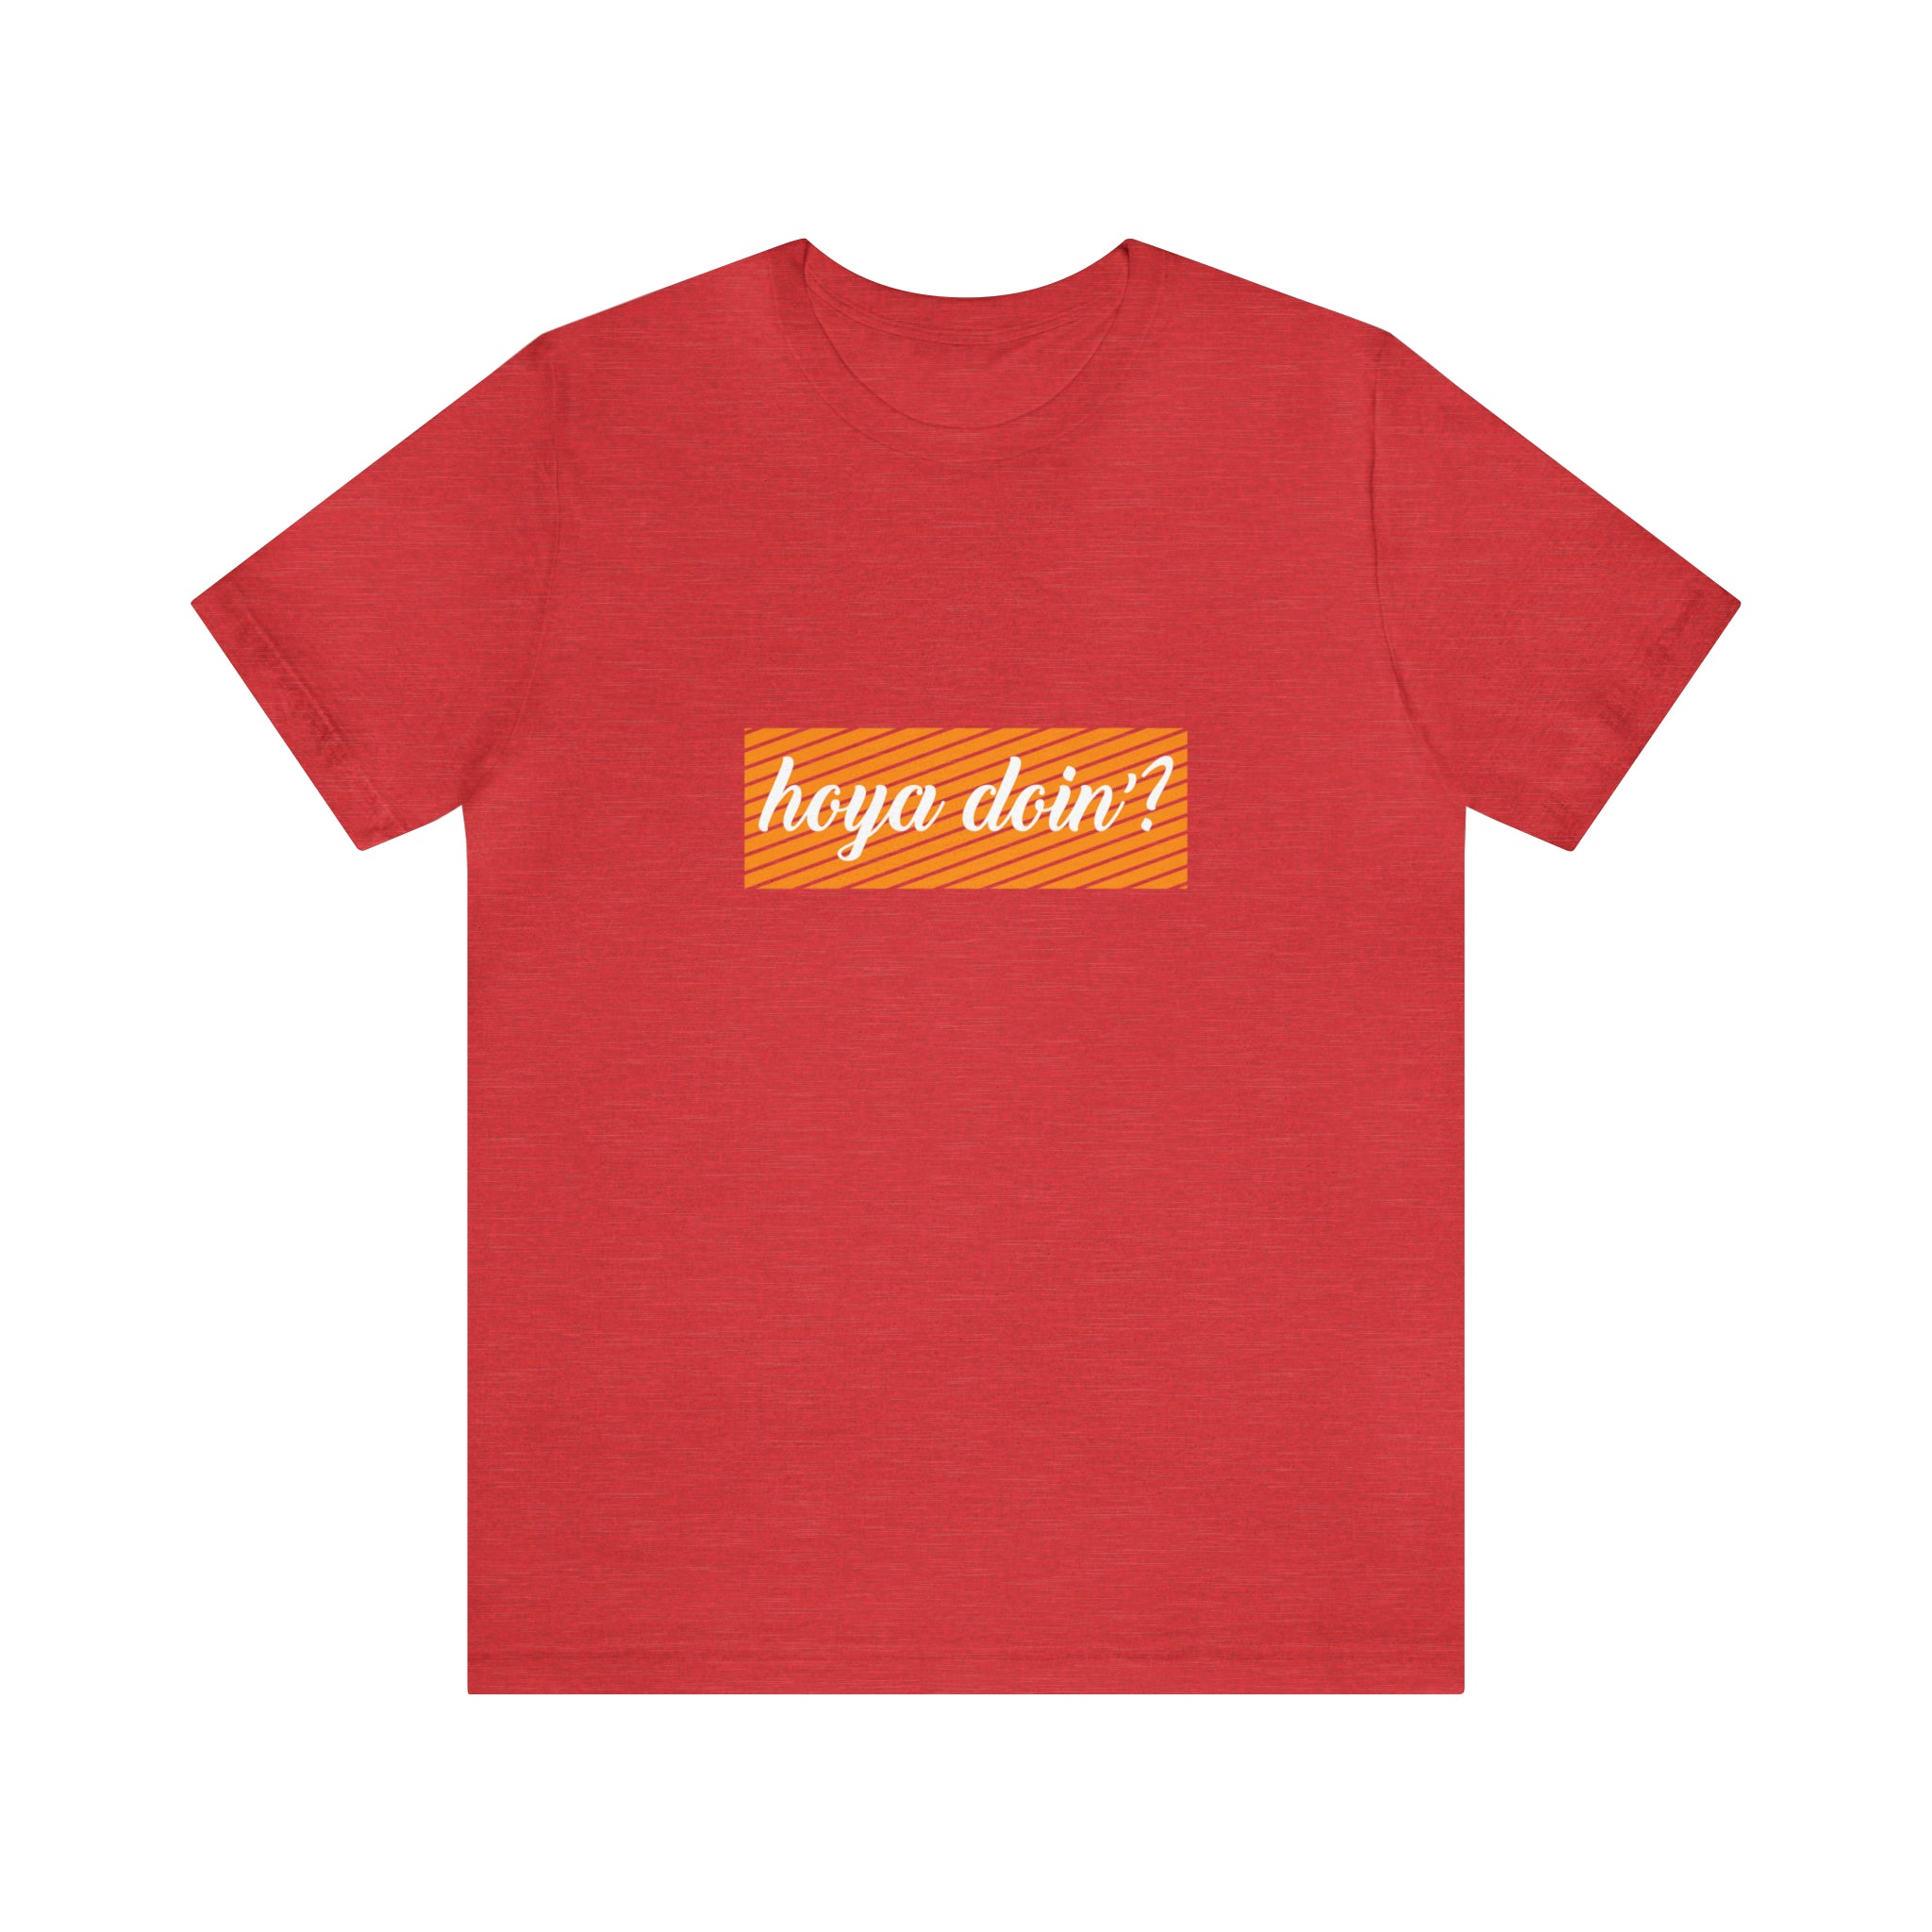 A Printify Hoya doin? T-Shirt that says hey do?